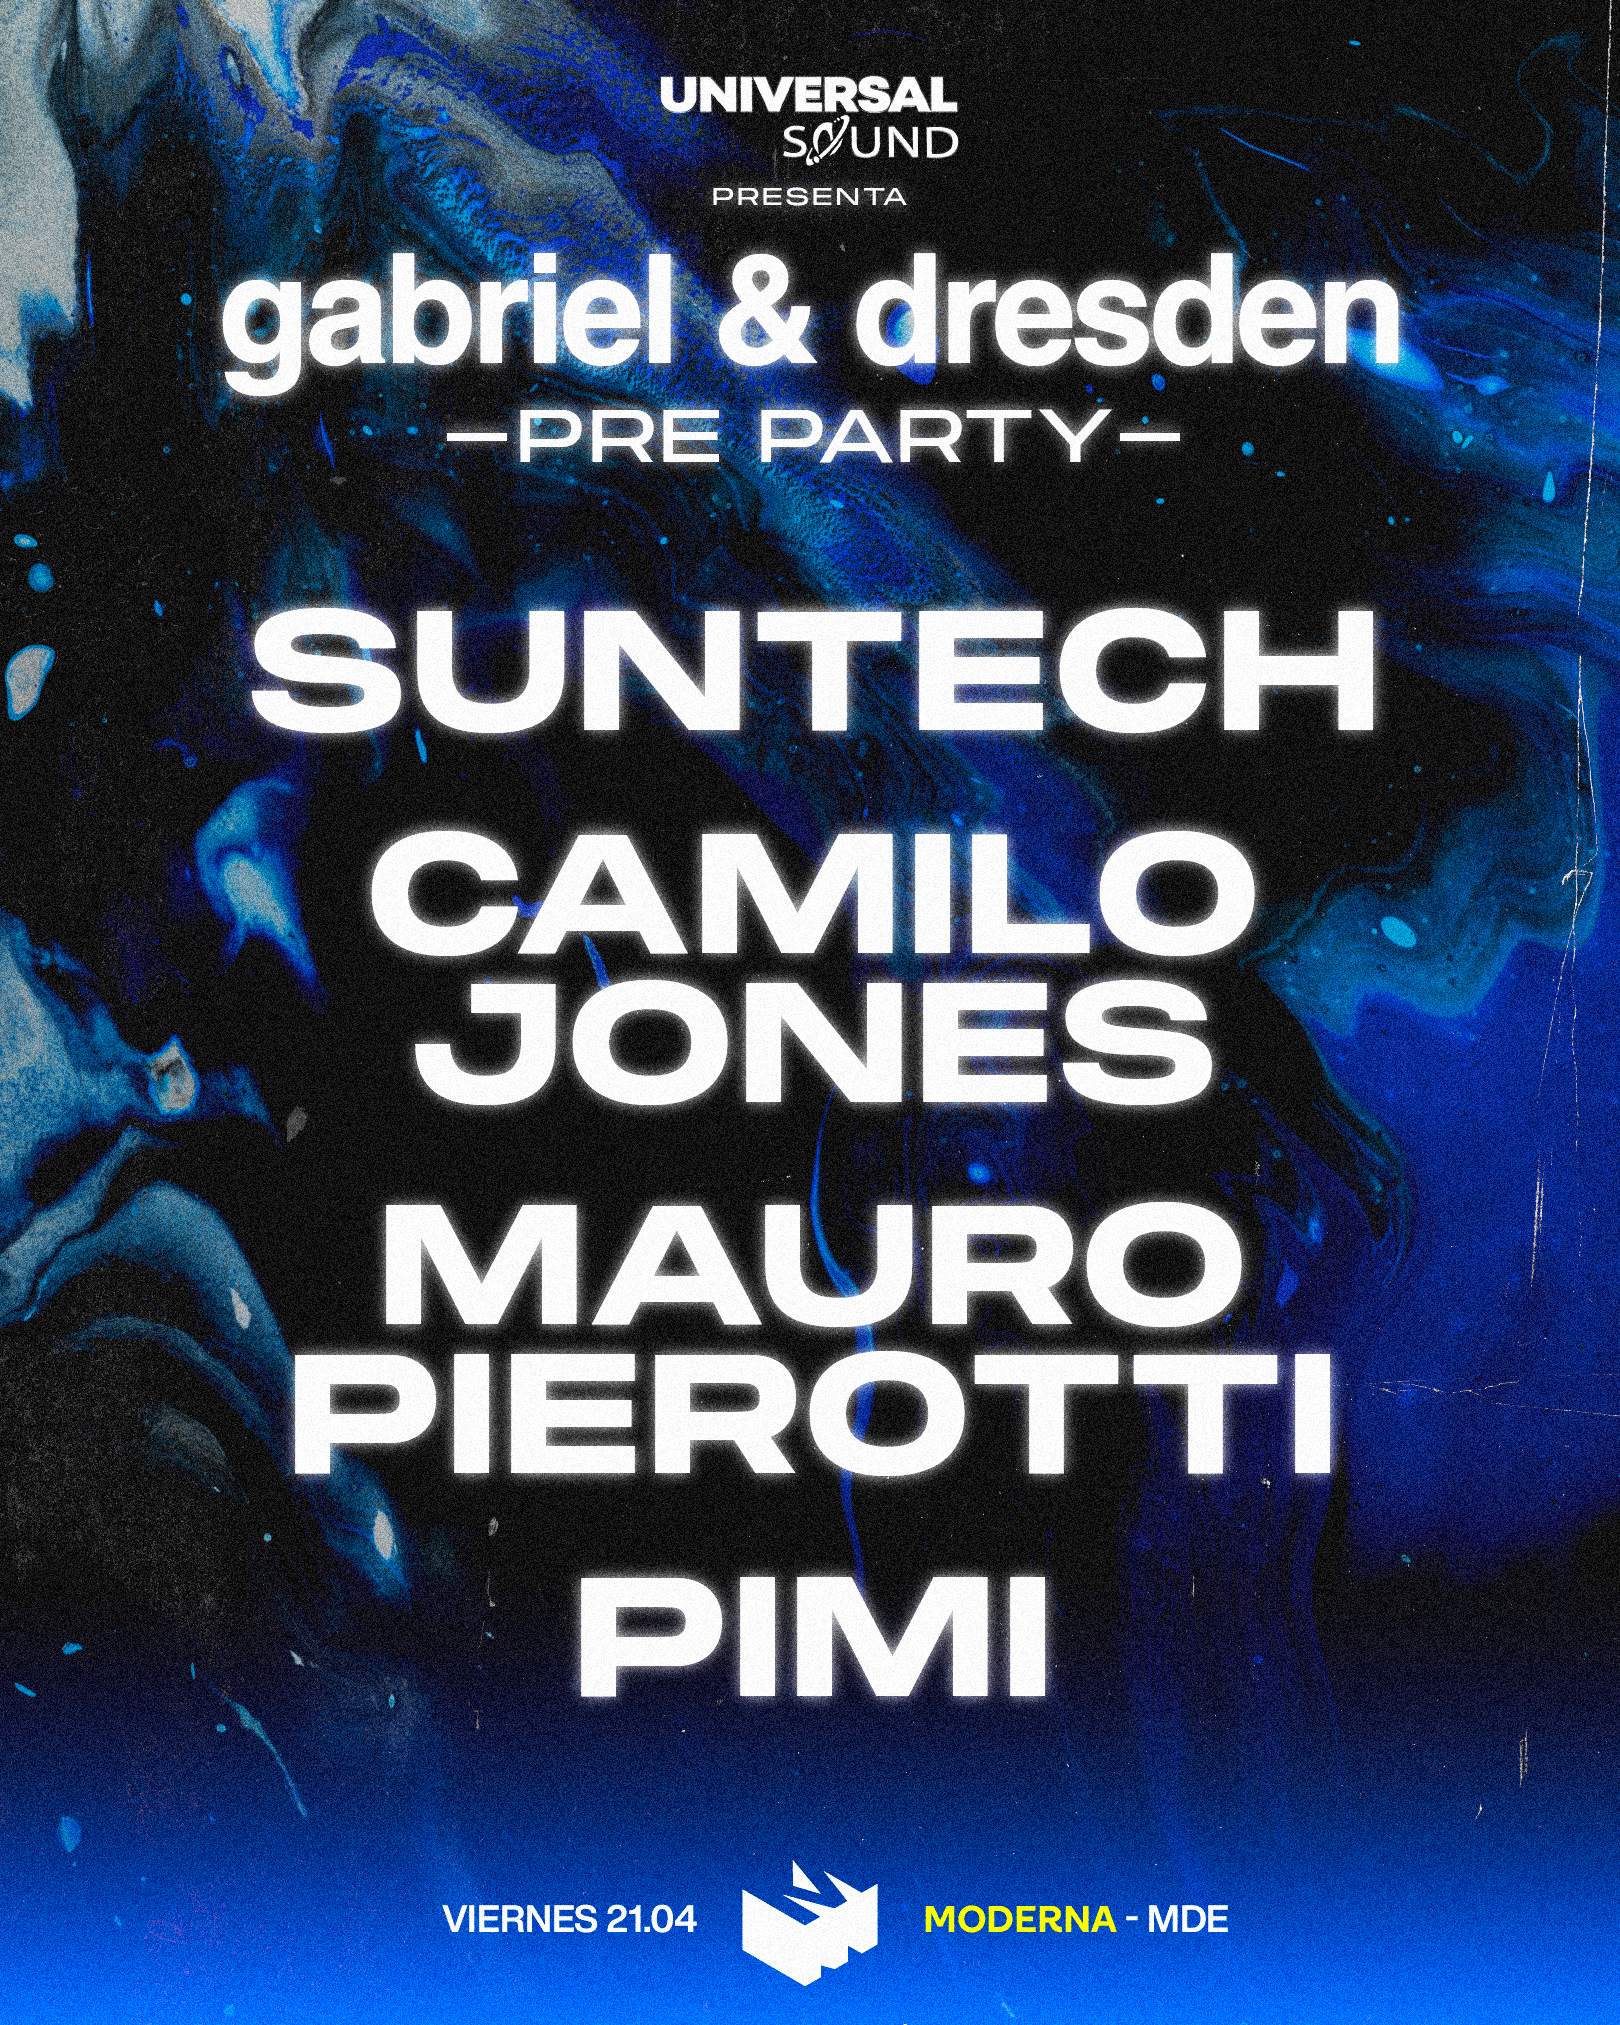 Universal Sound Pres. Gabriel & Dresden Pre-Party - フライヤー表